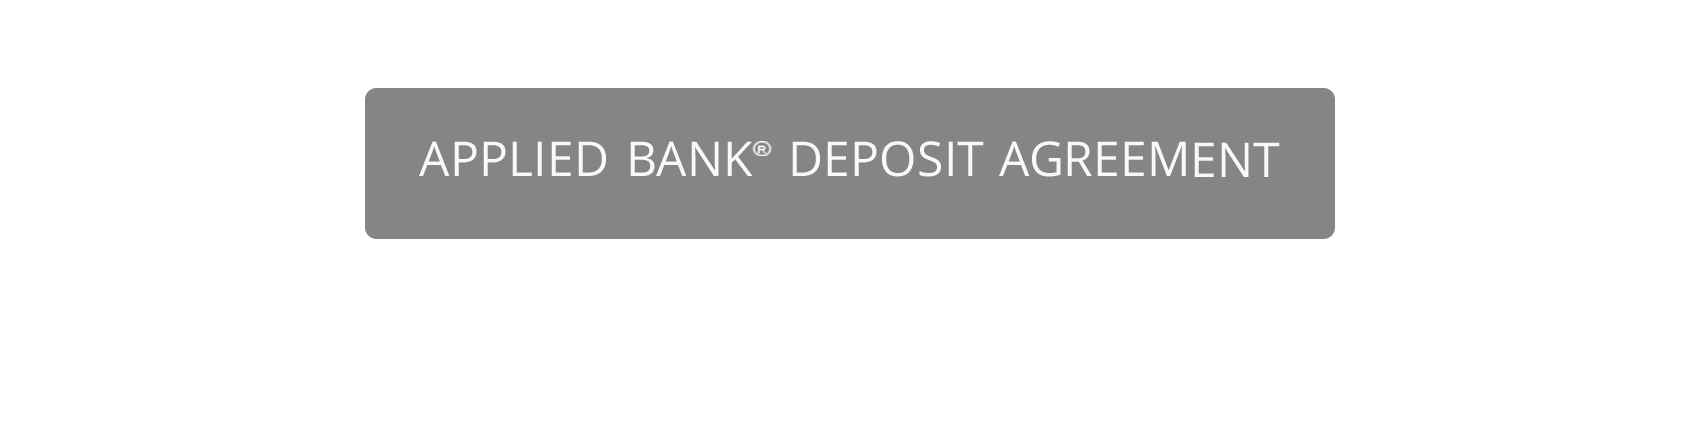 Applied Bank Deposit Agreement